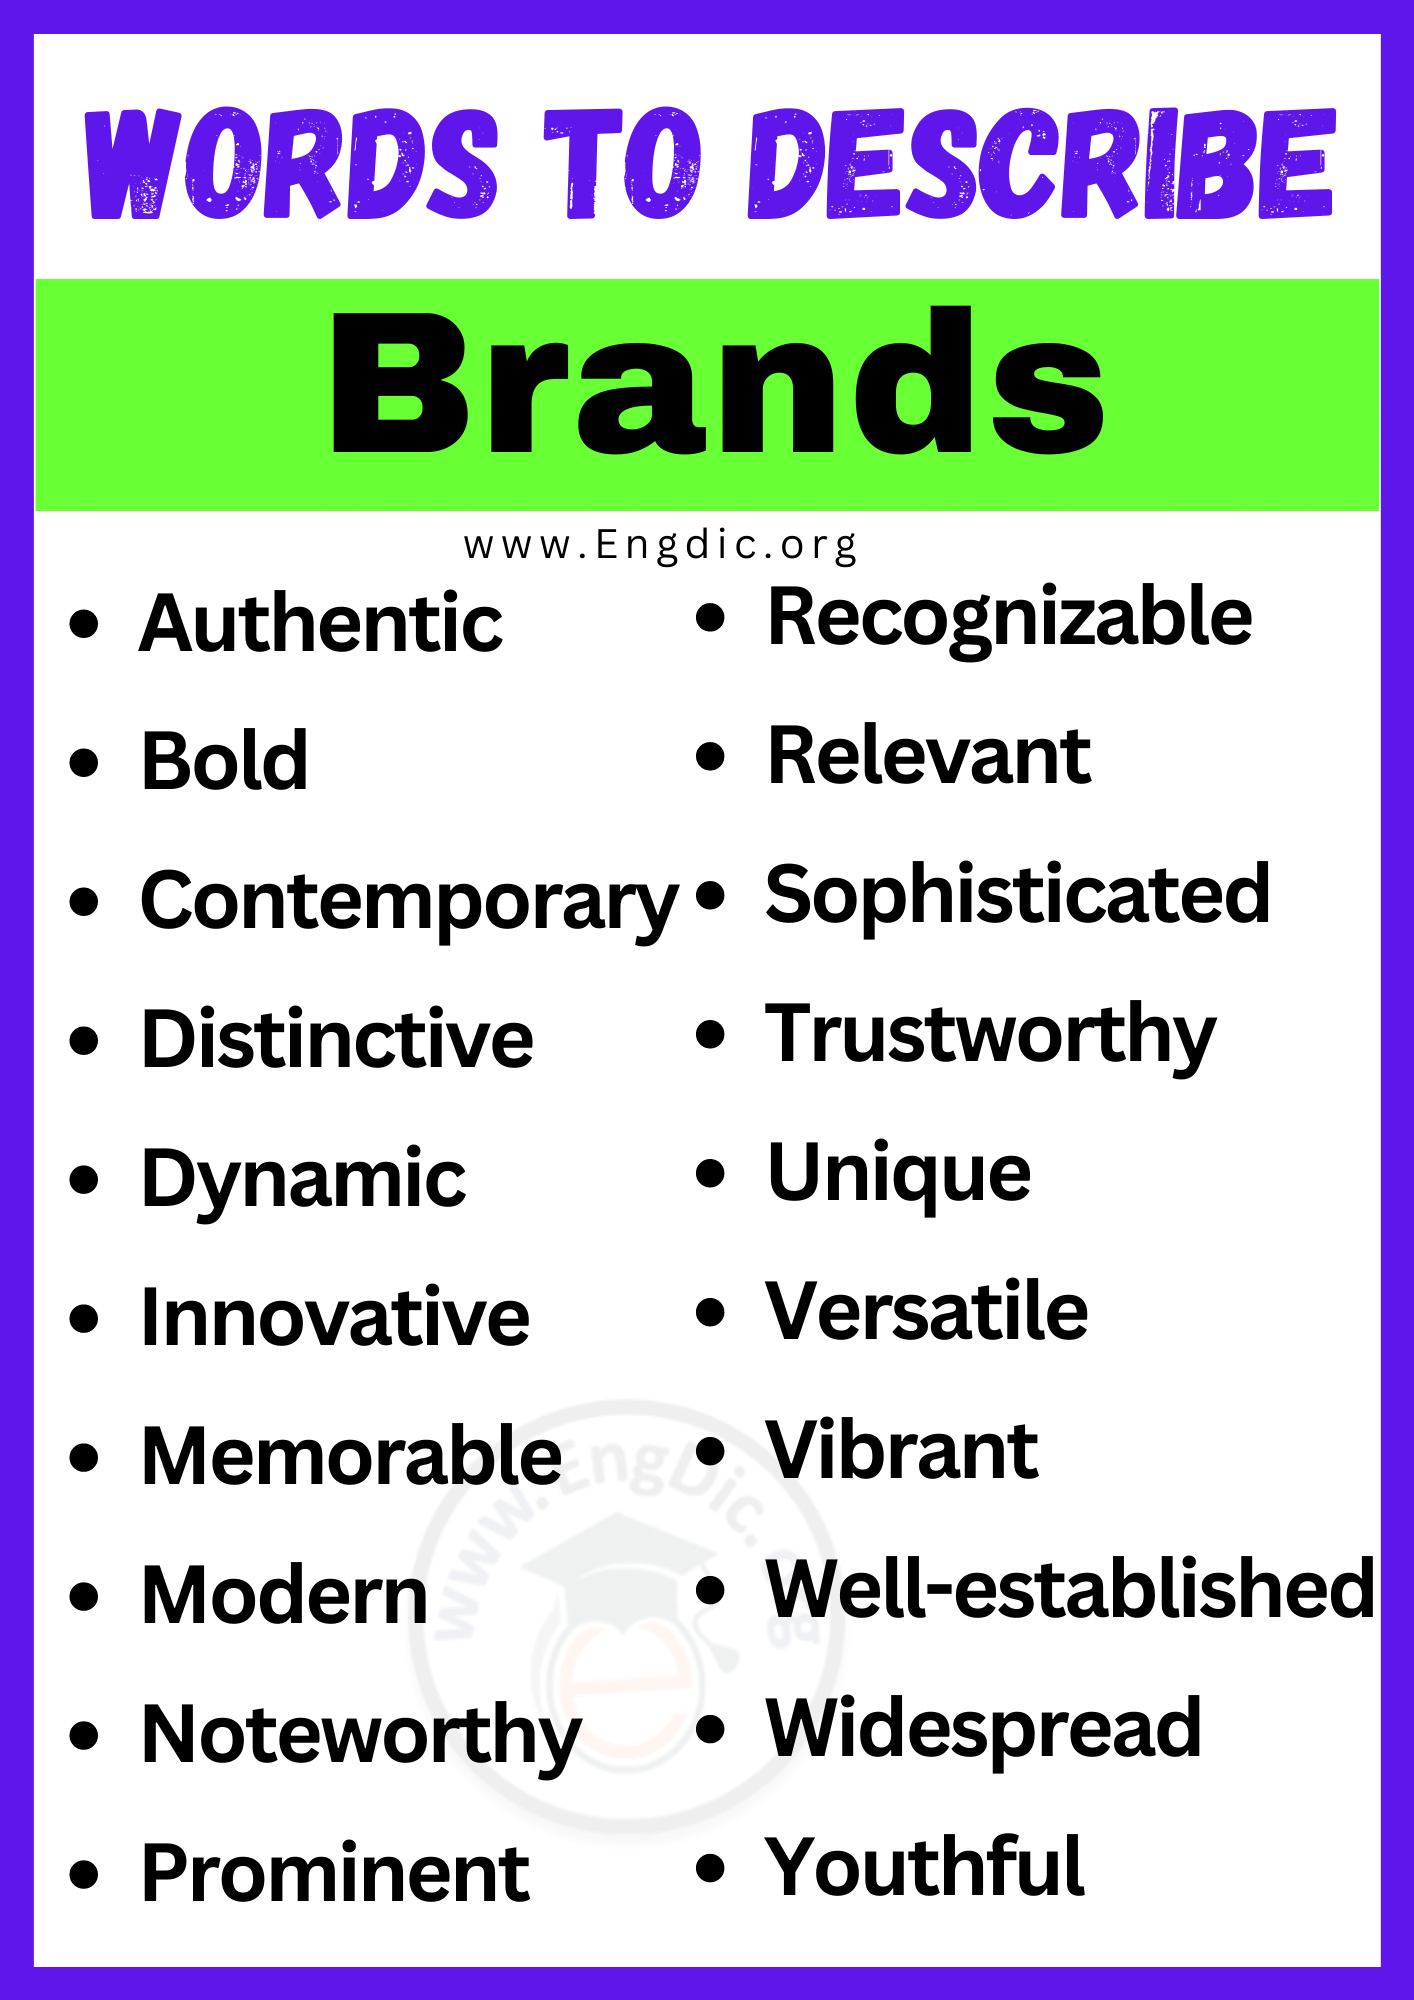 Words to Describe Brands